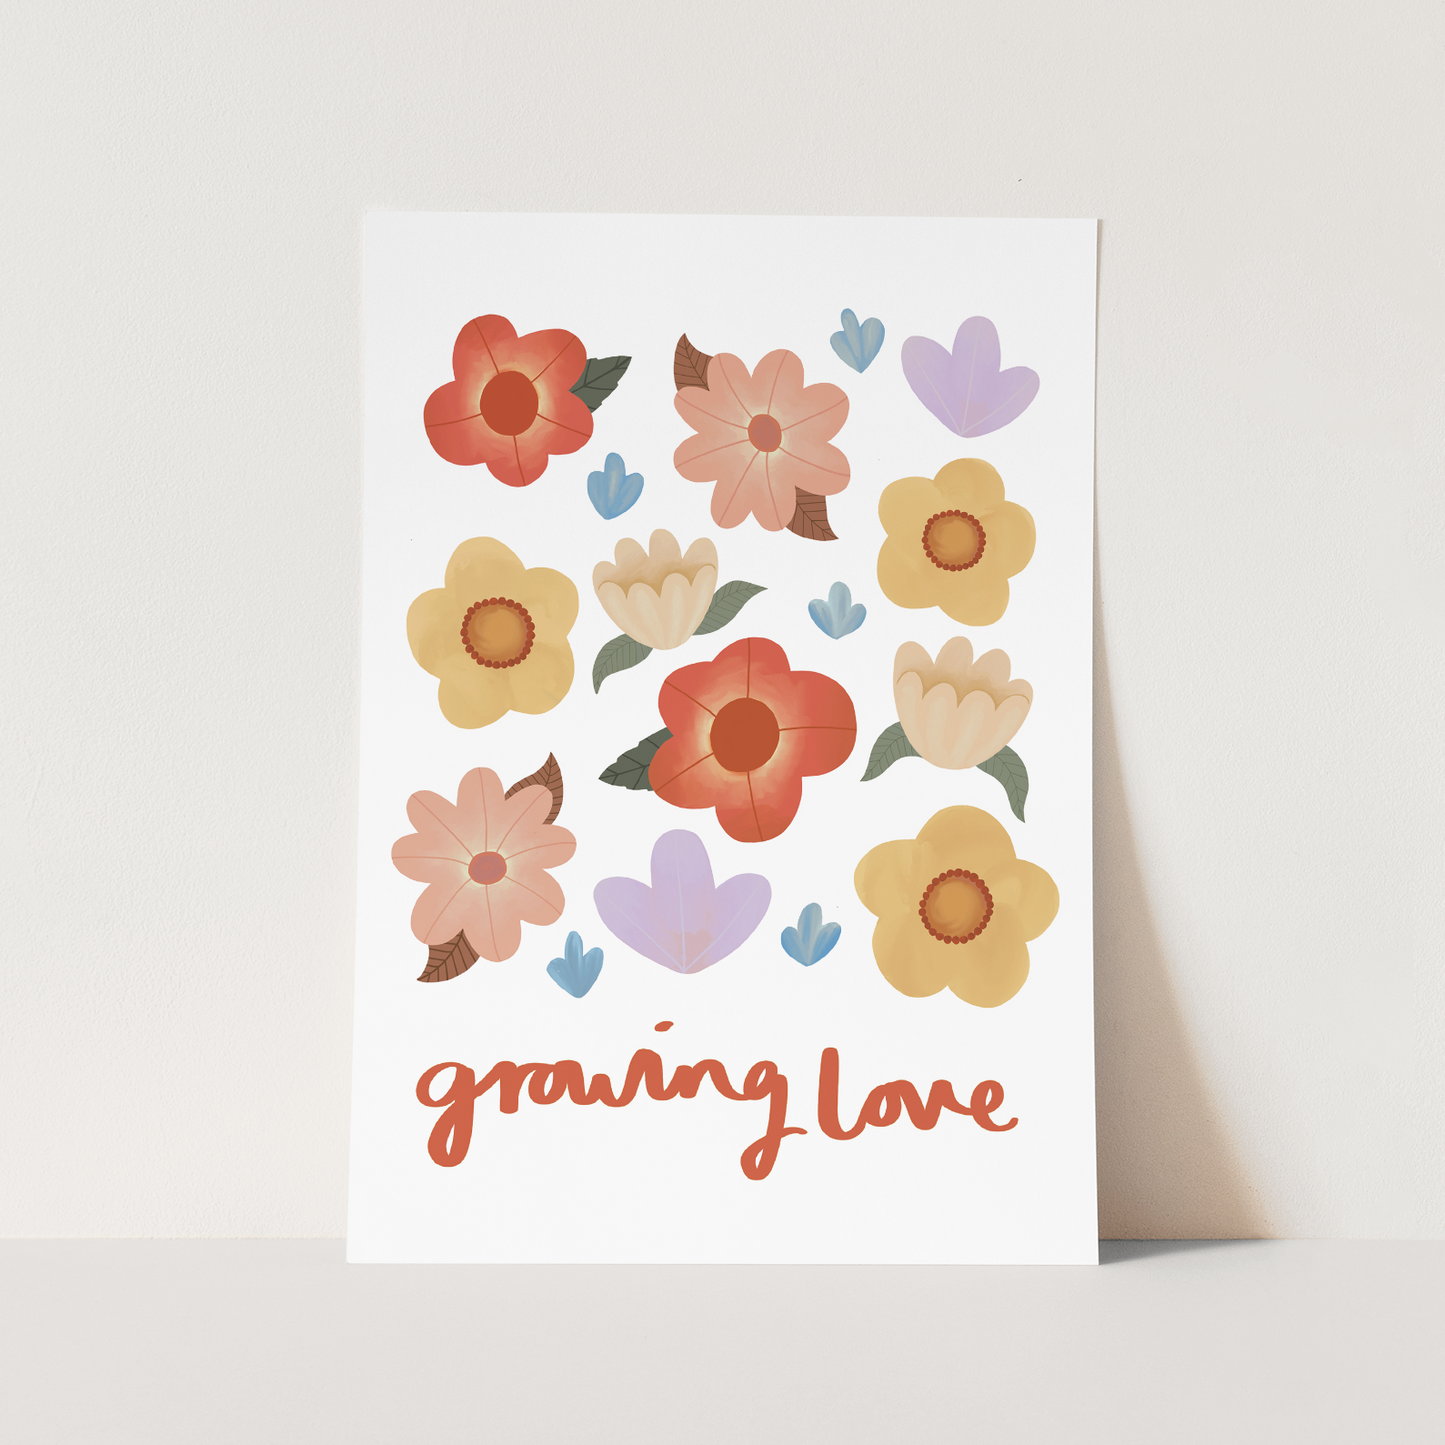 Growing love / Fine Art Print